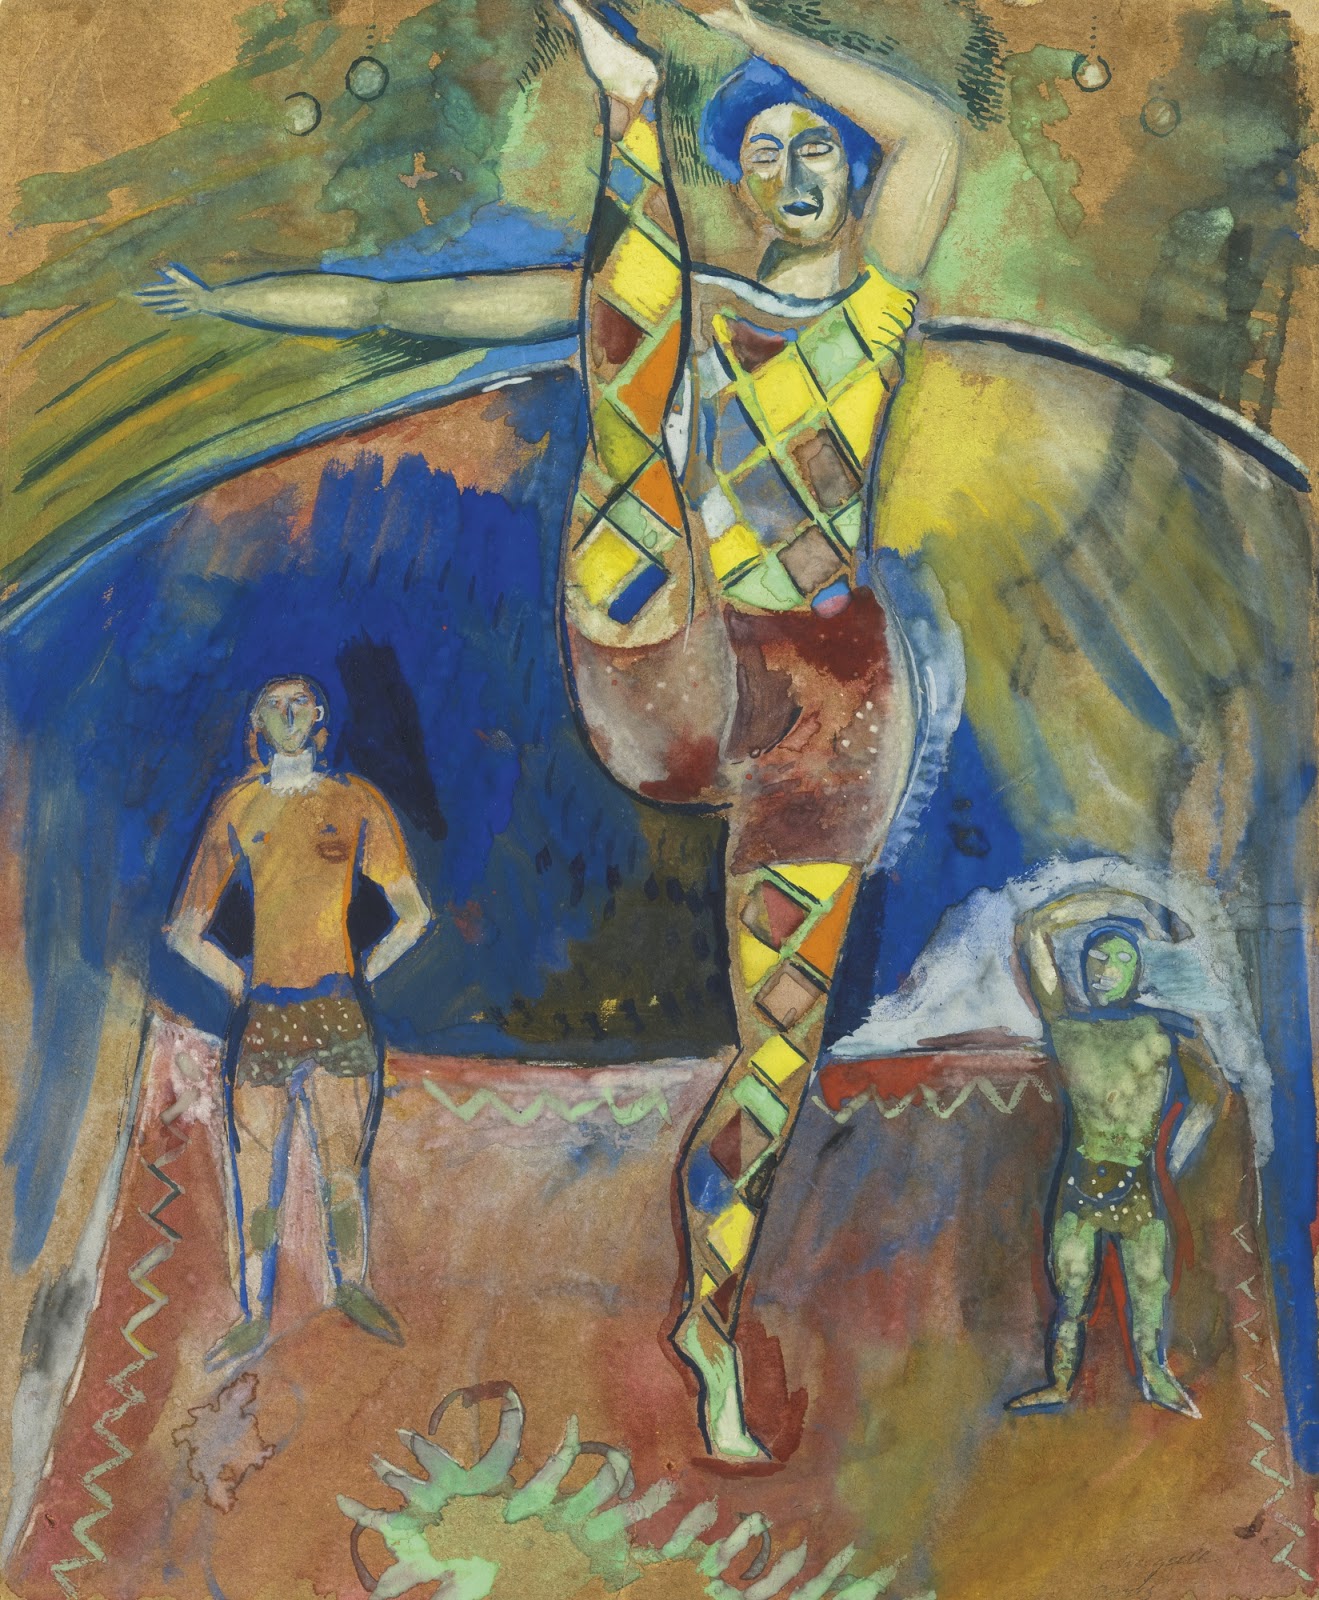 Marc+Chagall-1887-1985 (388).jpg